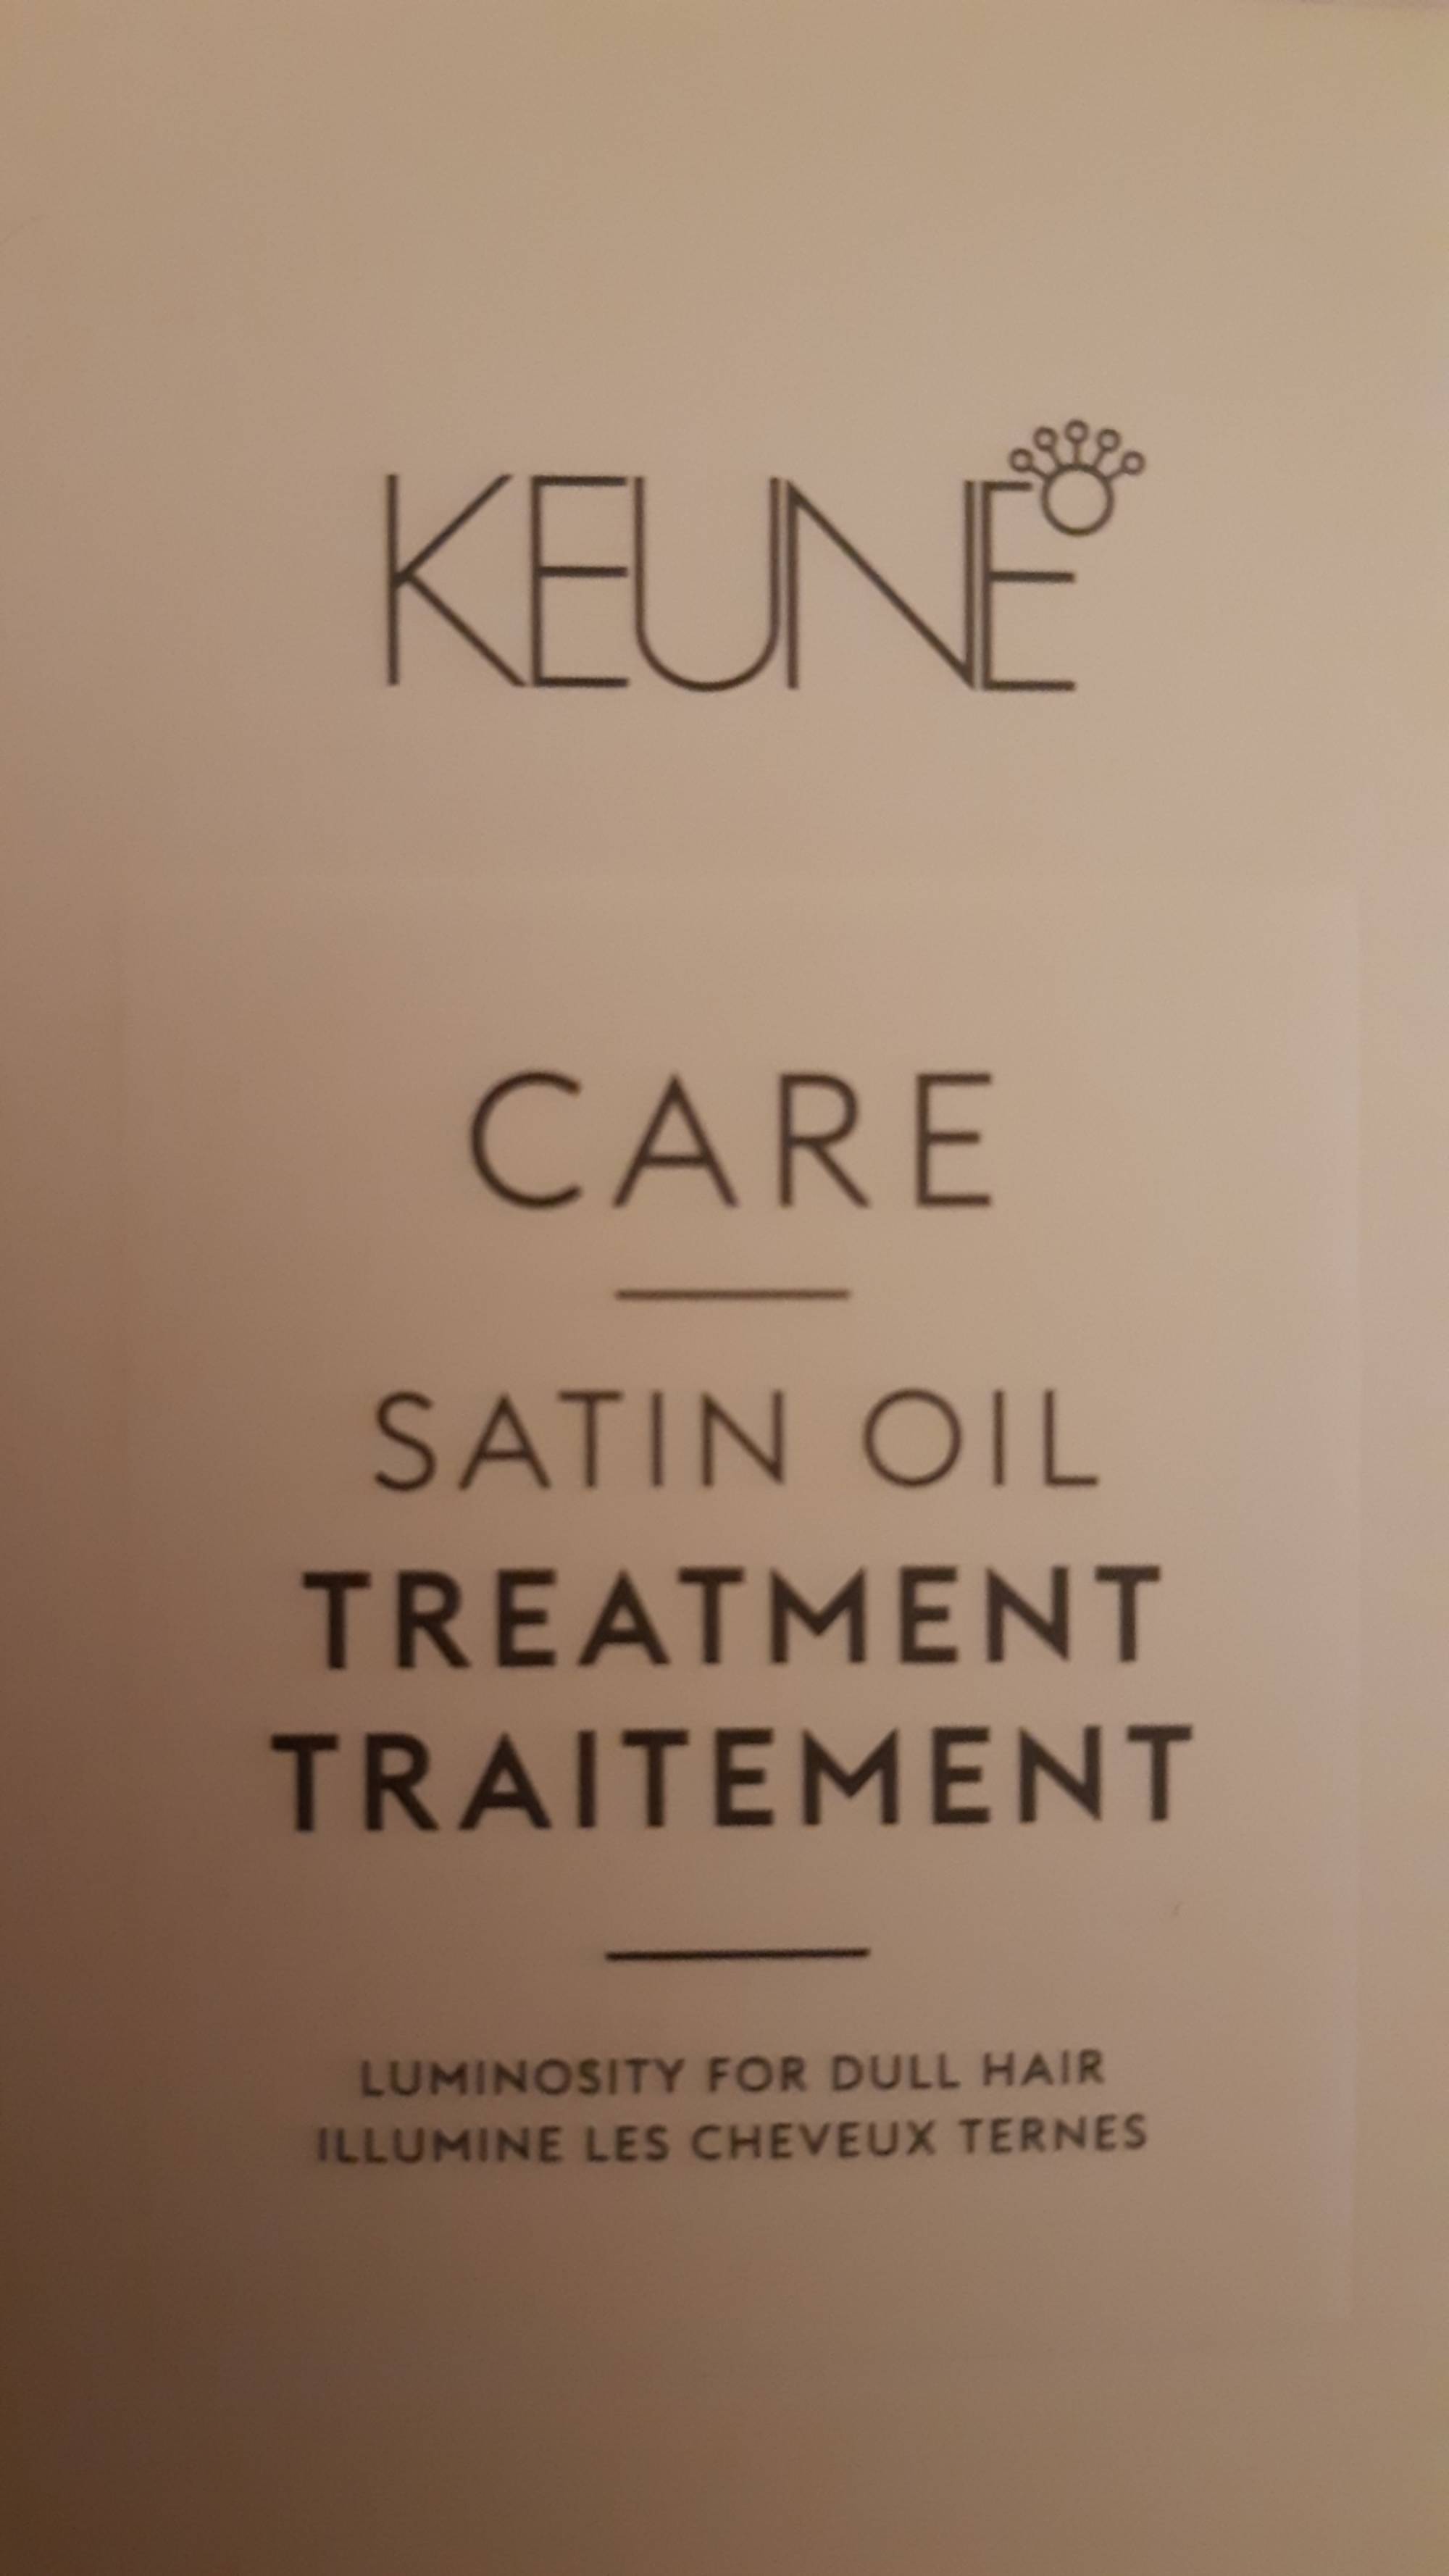 KEUNE - Care - Satin oil